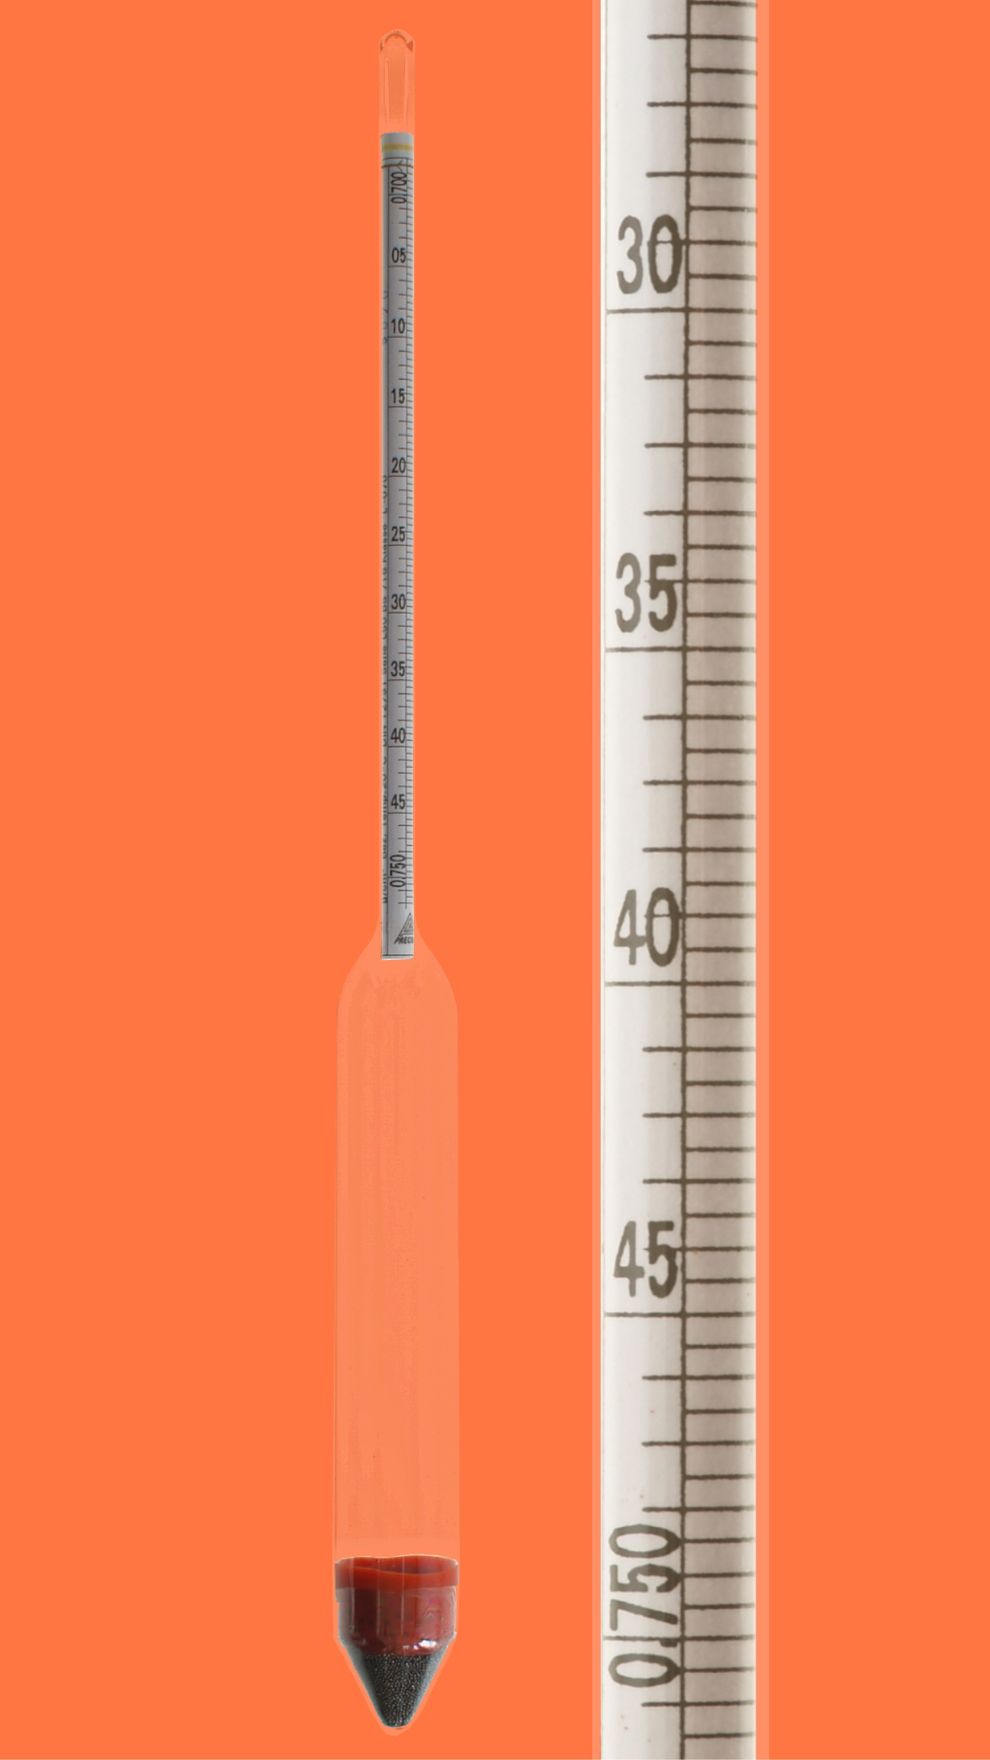 Aräometer, DIN 12791, L50, 1,00-1,05:0,0005g/cm³, Bezugstemp. 20°C, ohne Thermometer